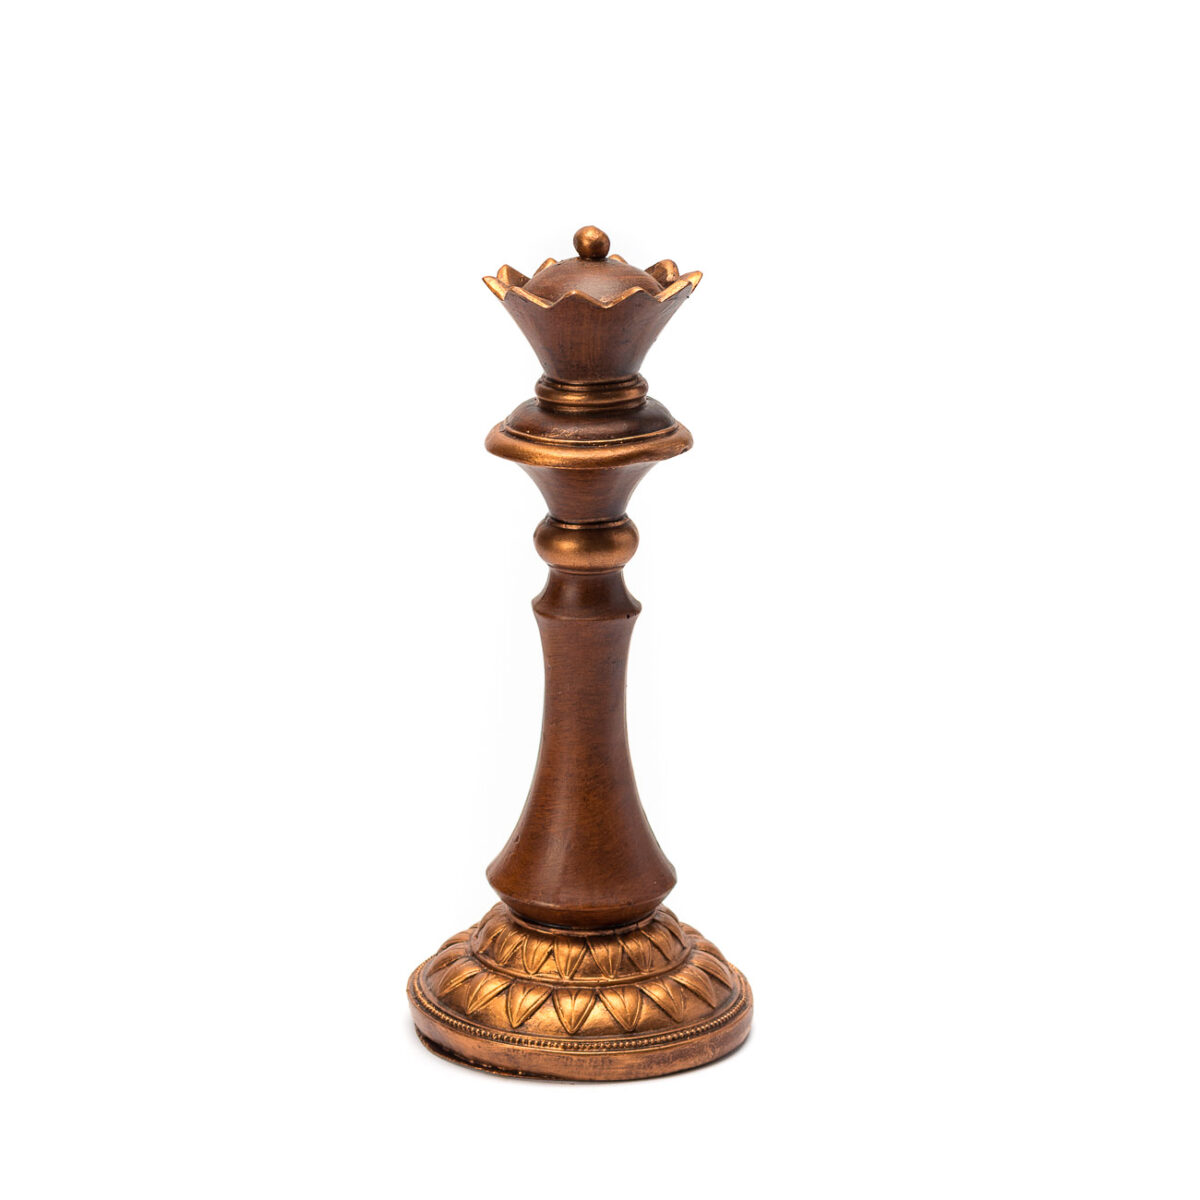 Rainha peça do xadrez decorativa em resina 30 cm - Loja Bora, Decora!